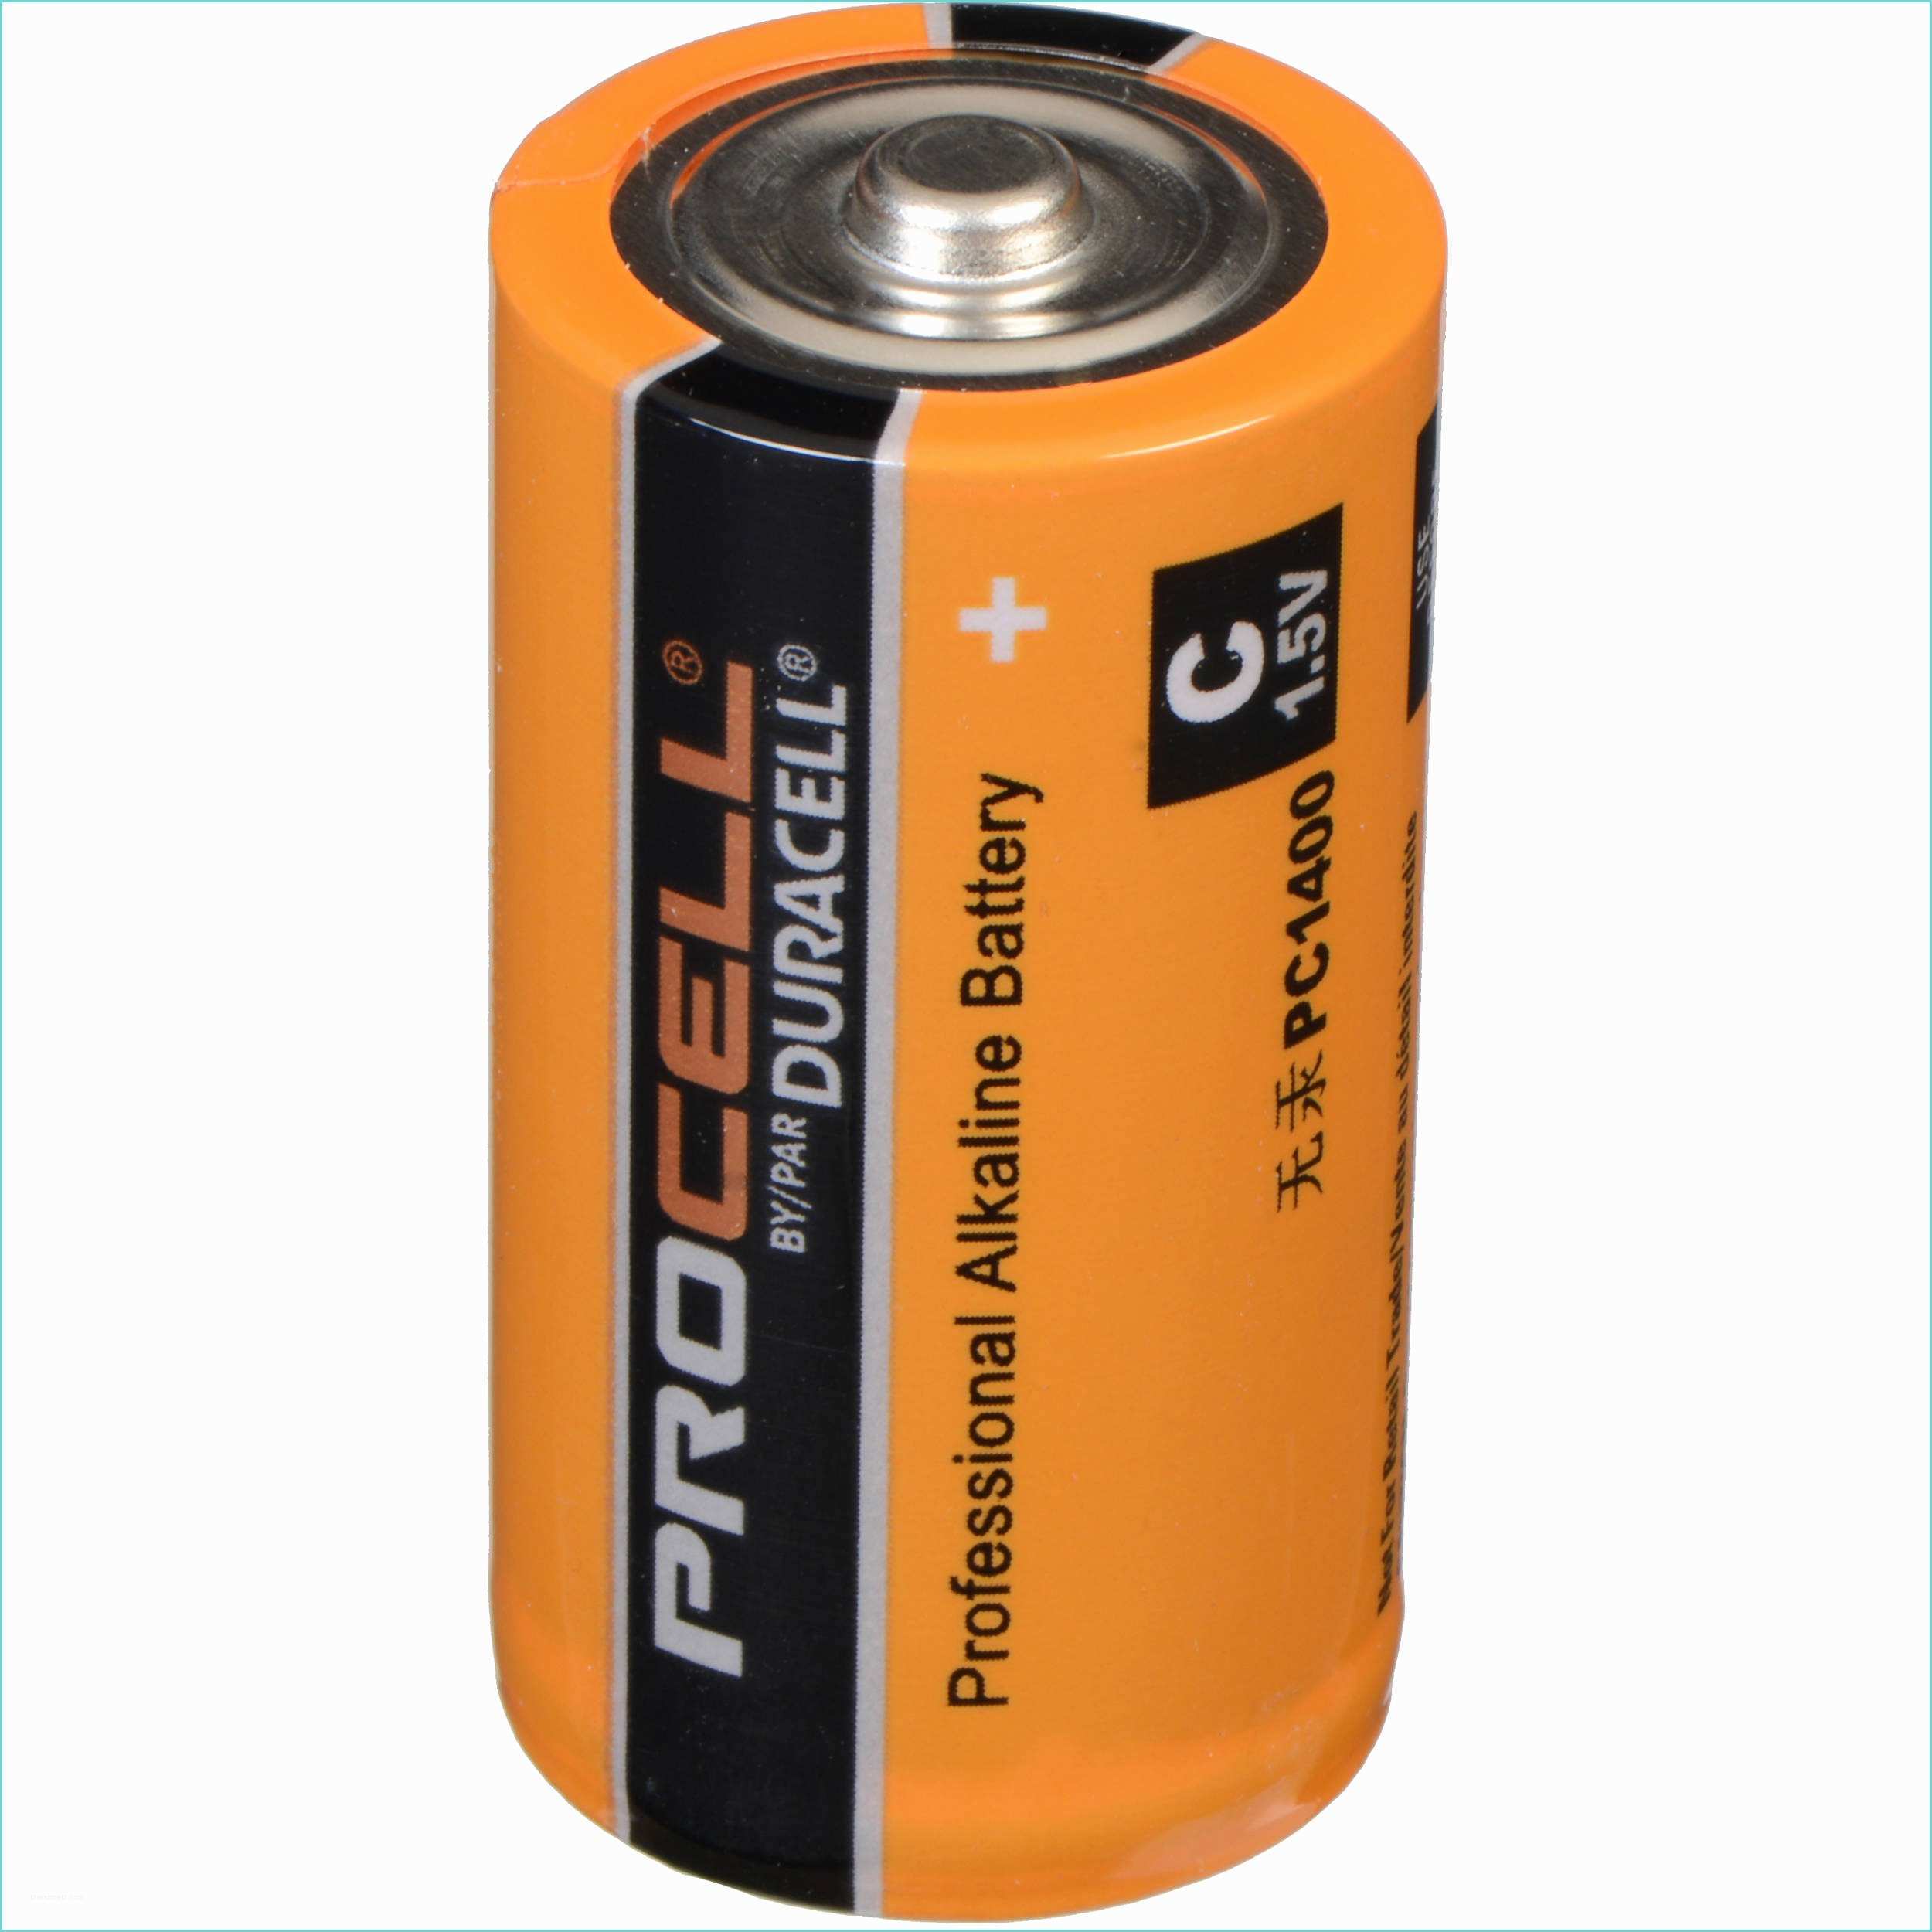 Duracell Alkaline Batteries Duracell C Procell 1 5v Alkaline Batteries 12 Pack